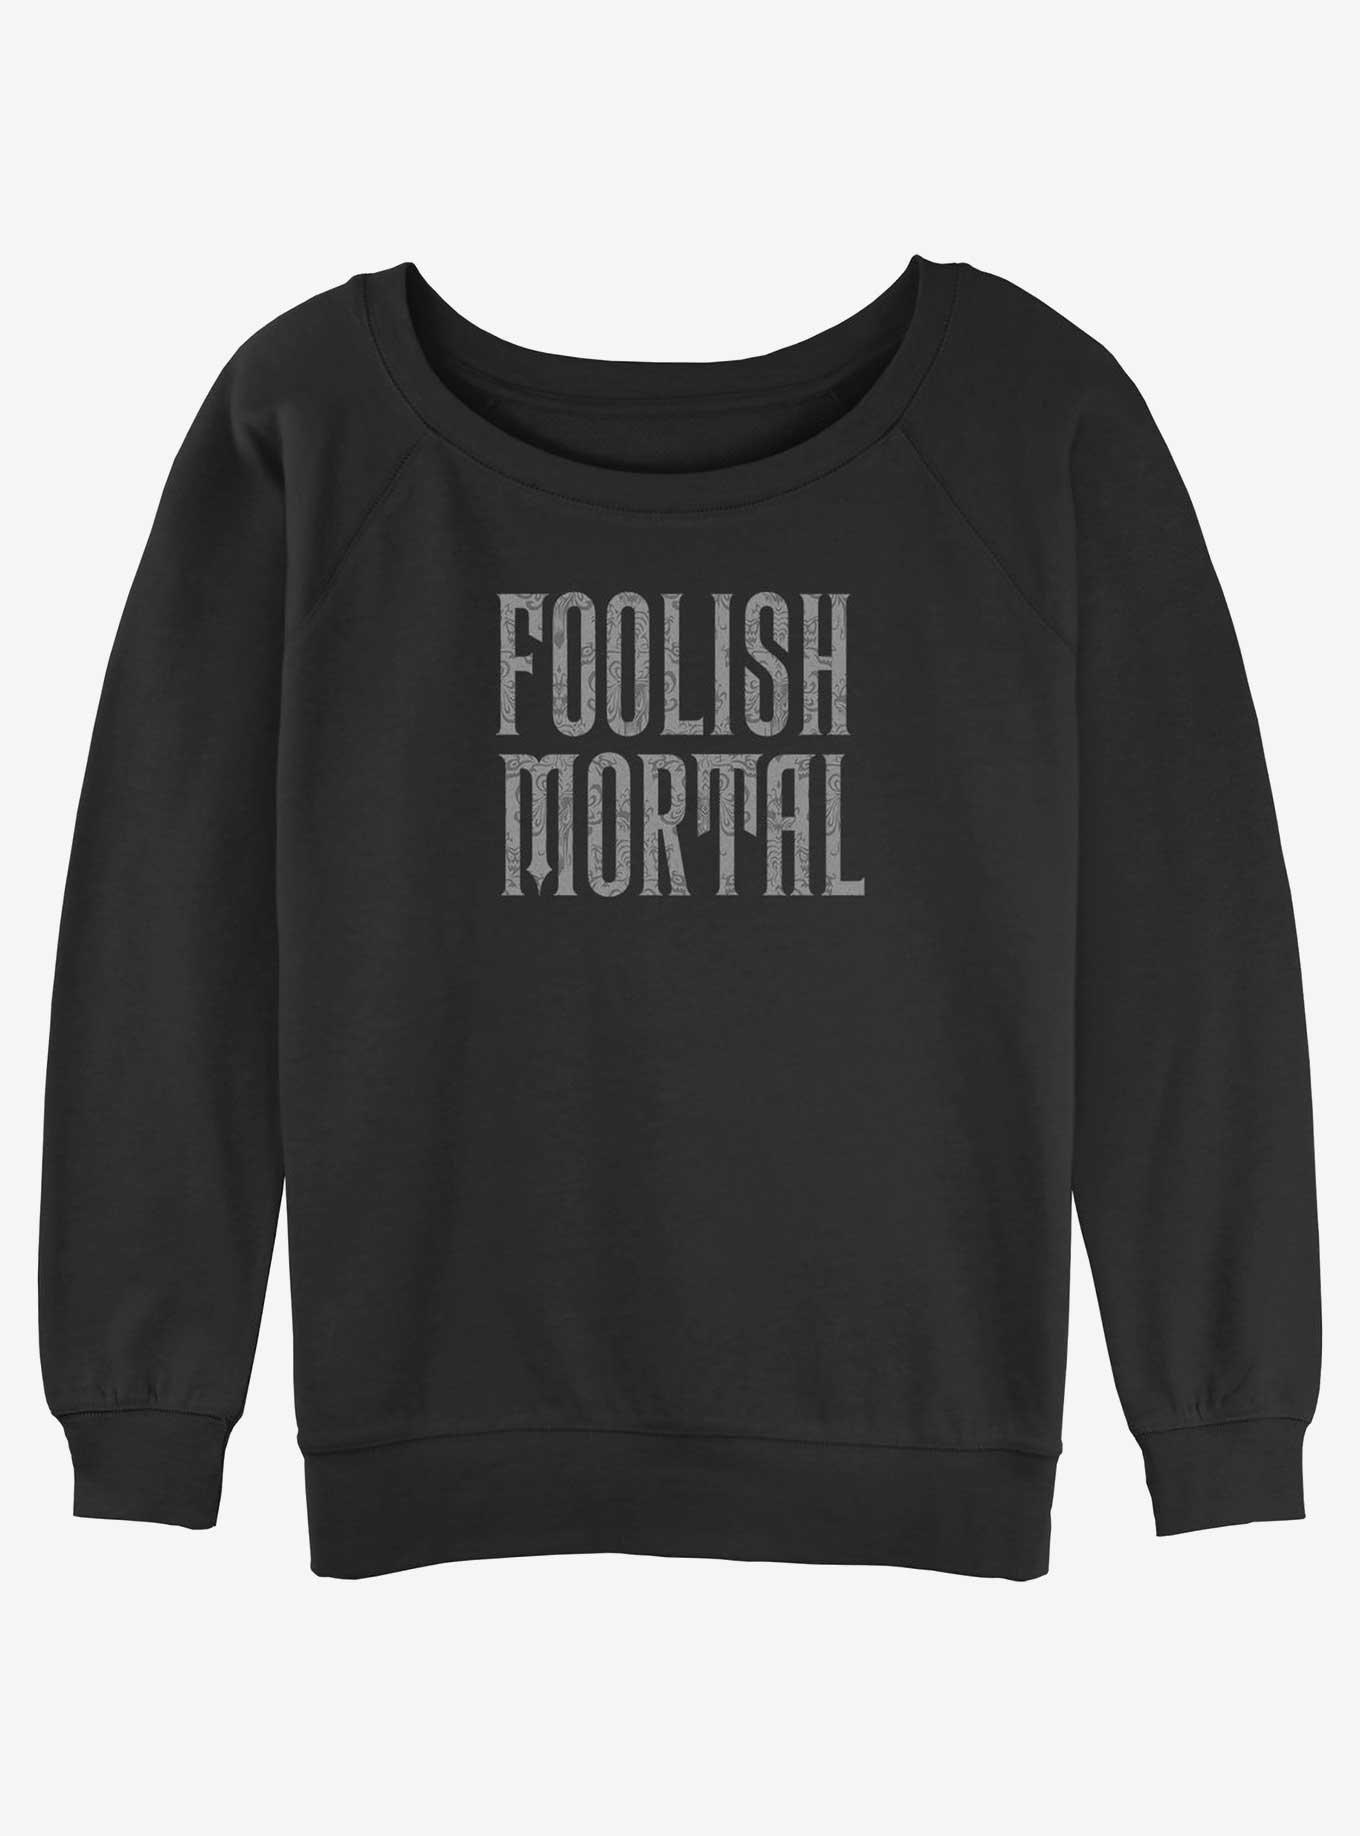 Disney Haunted Mansion Foolish Mortal Girls Slouchy Sweatshirt, BLACK, hi-res